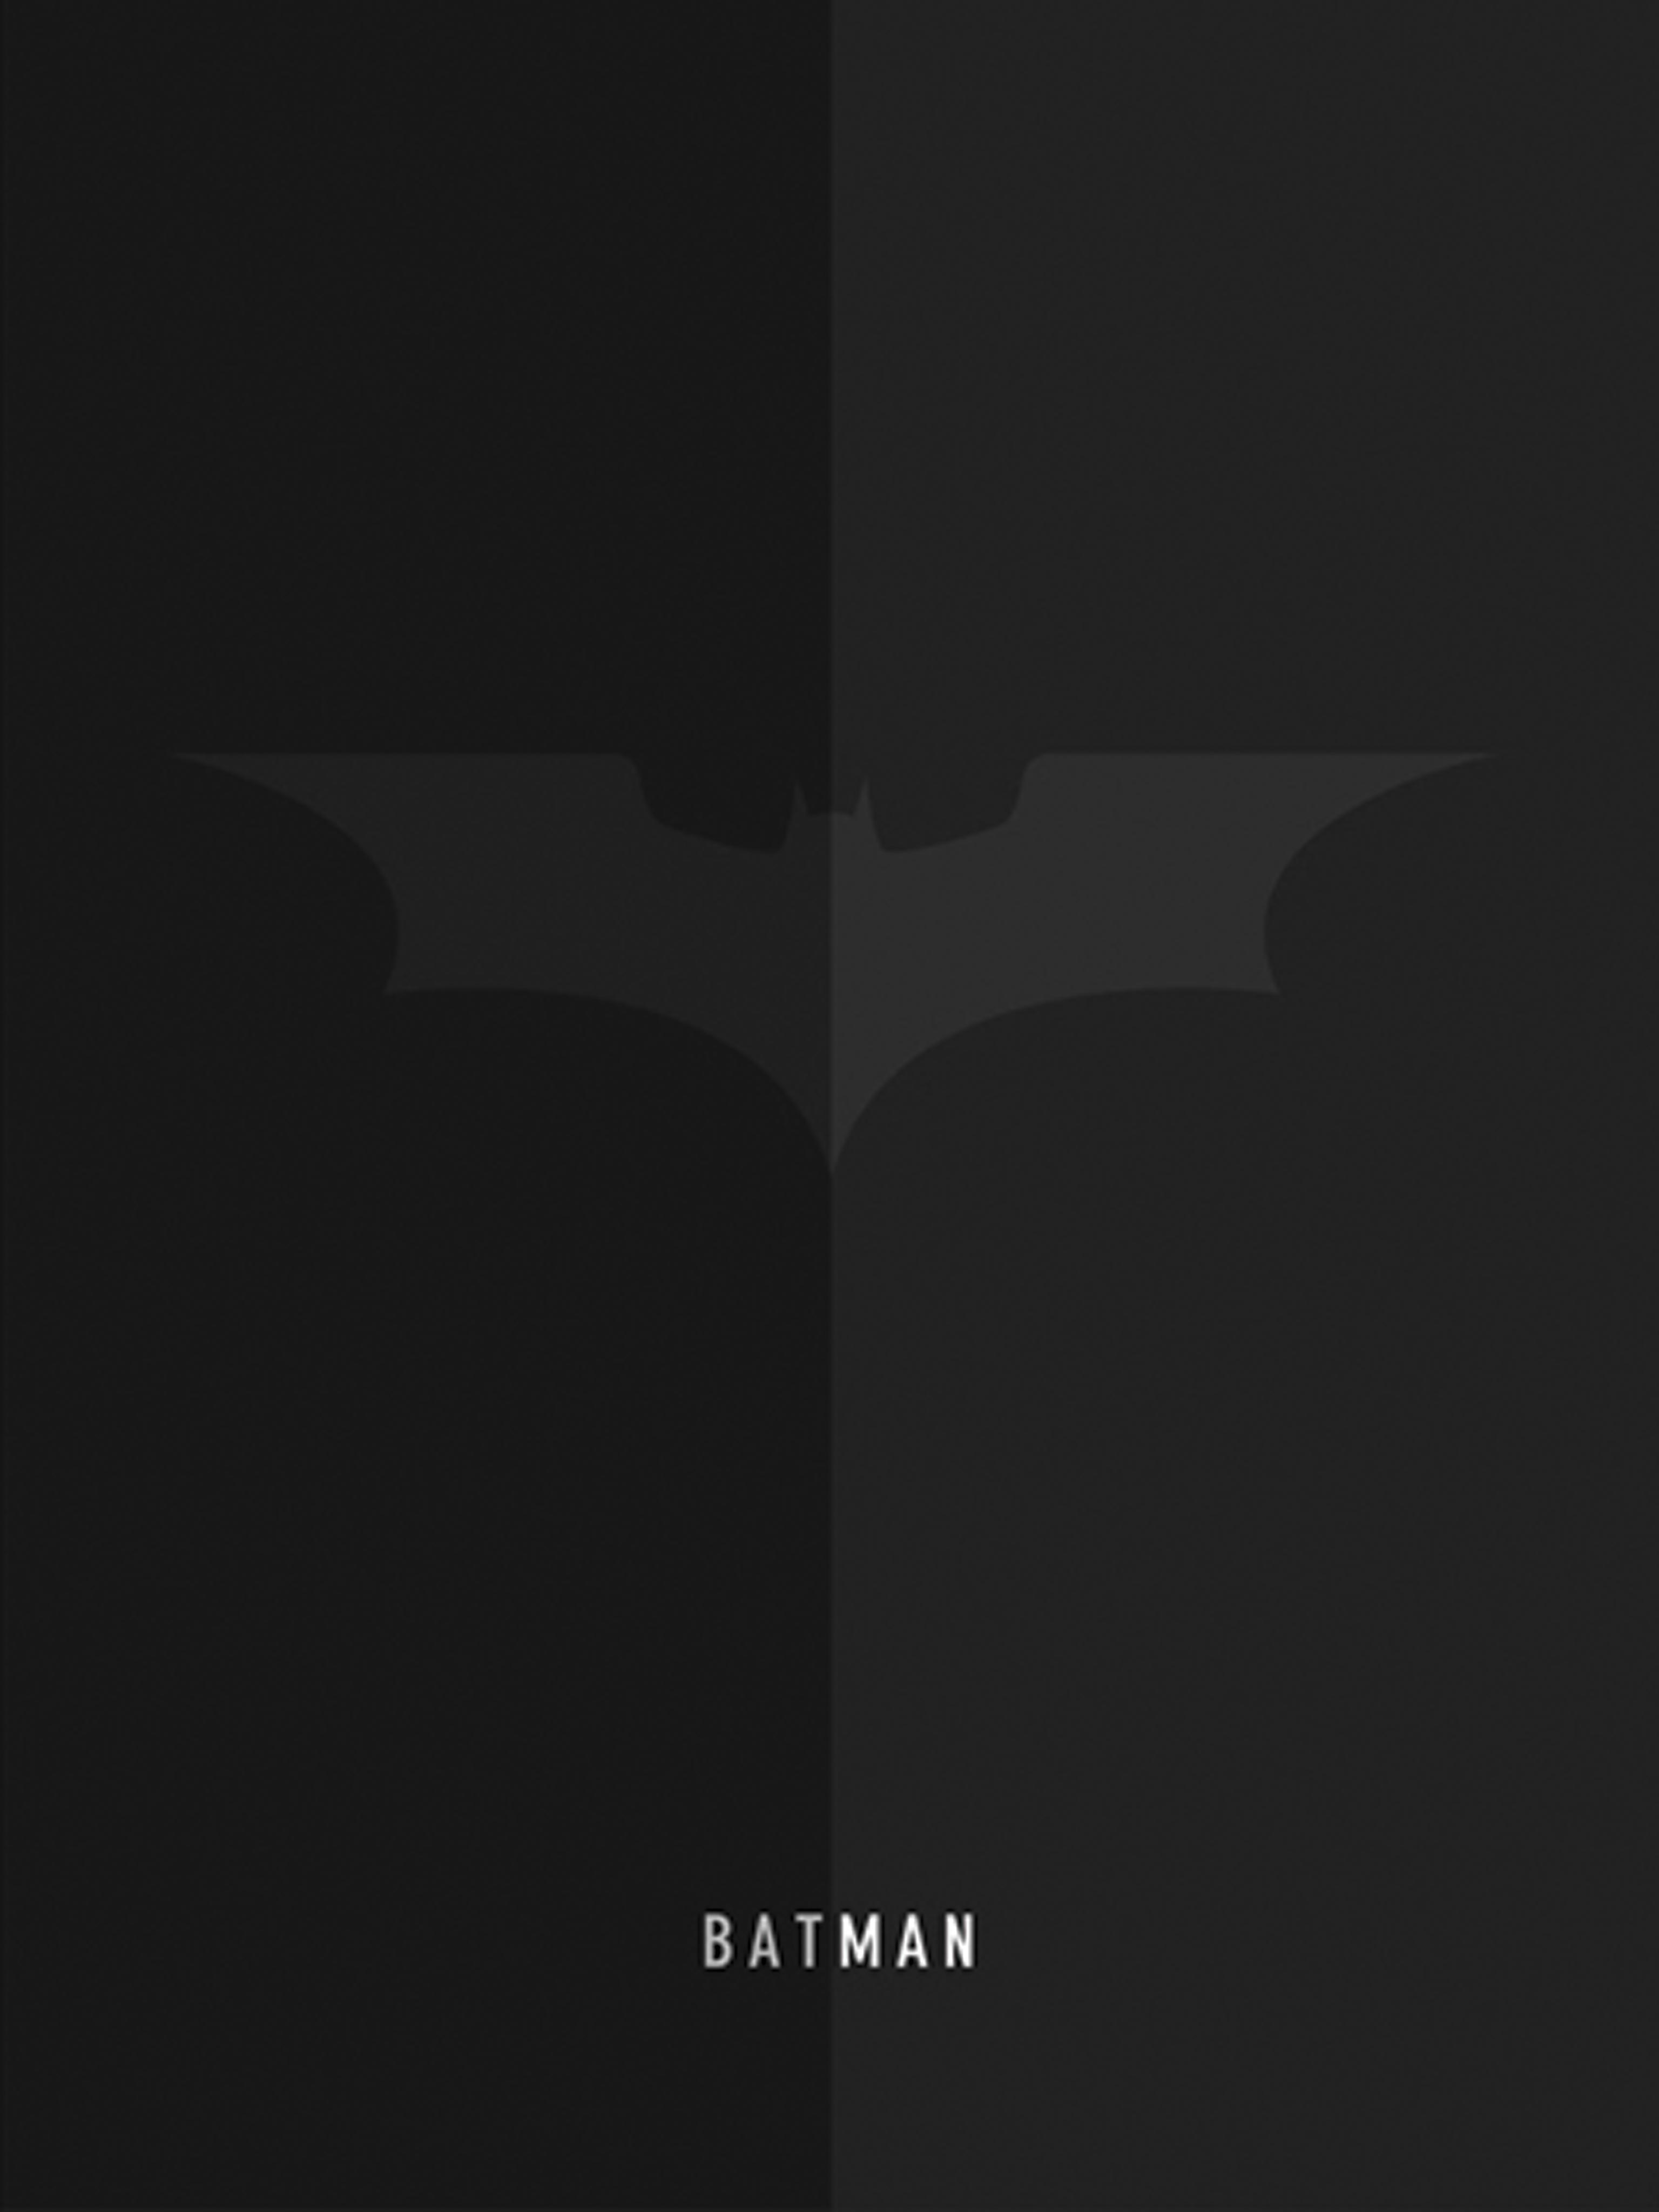 Batman Mobile Wallpaper | Miniwallist